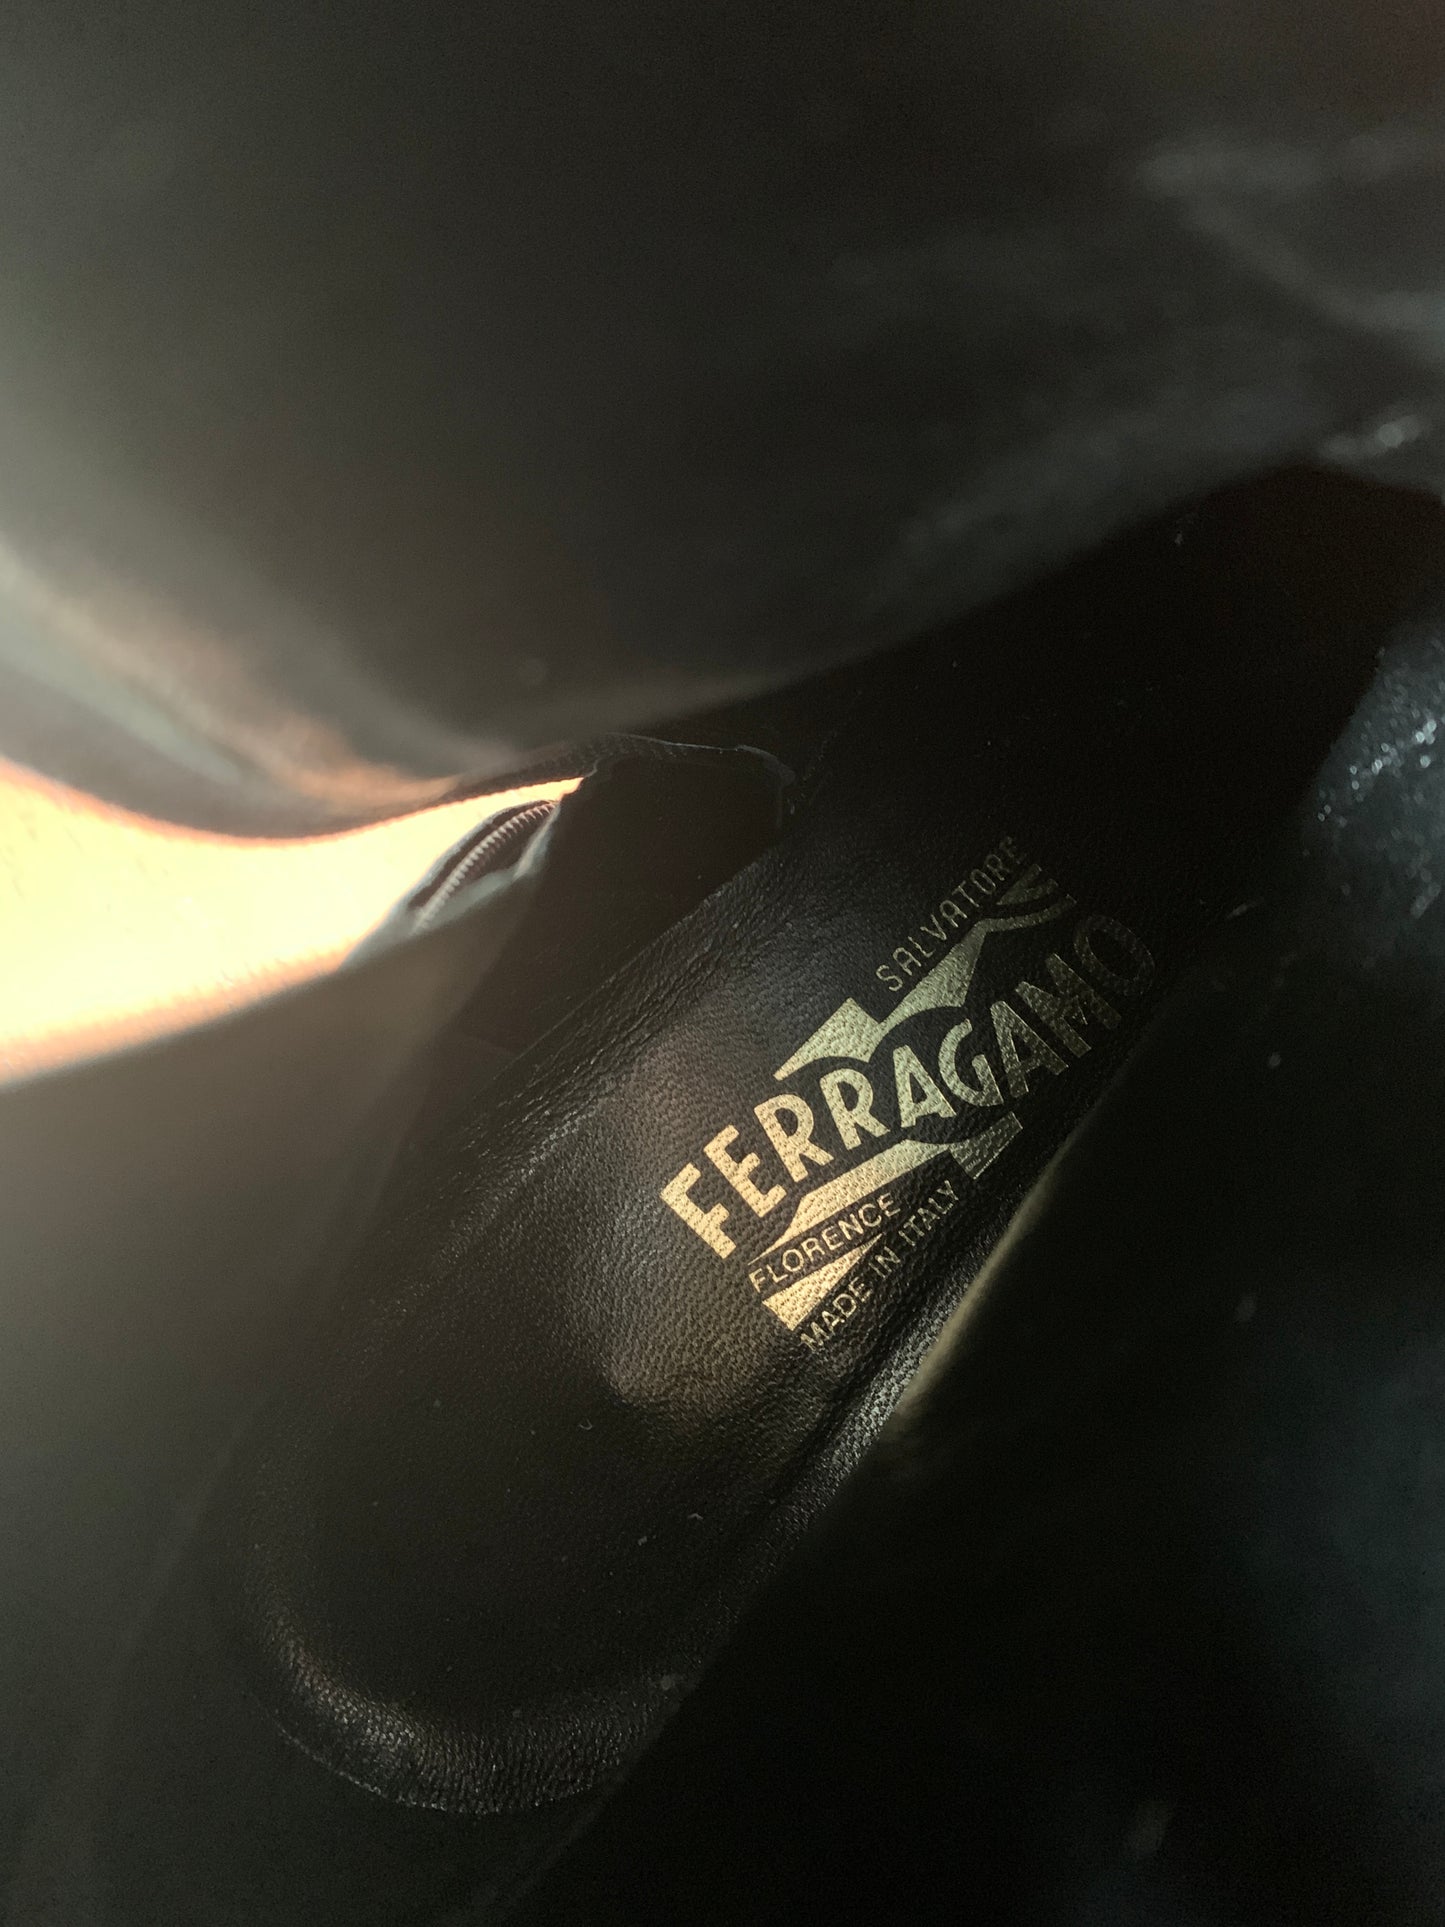 Salvatore Ferragamo Black Leather Boots Sz 7